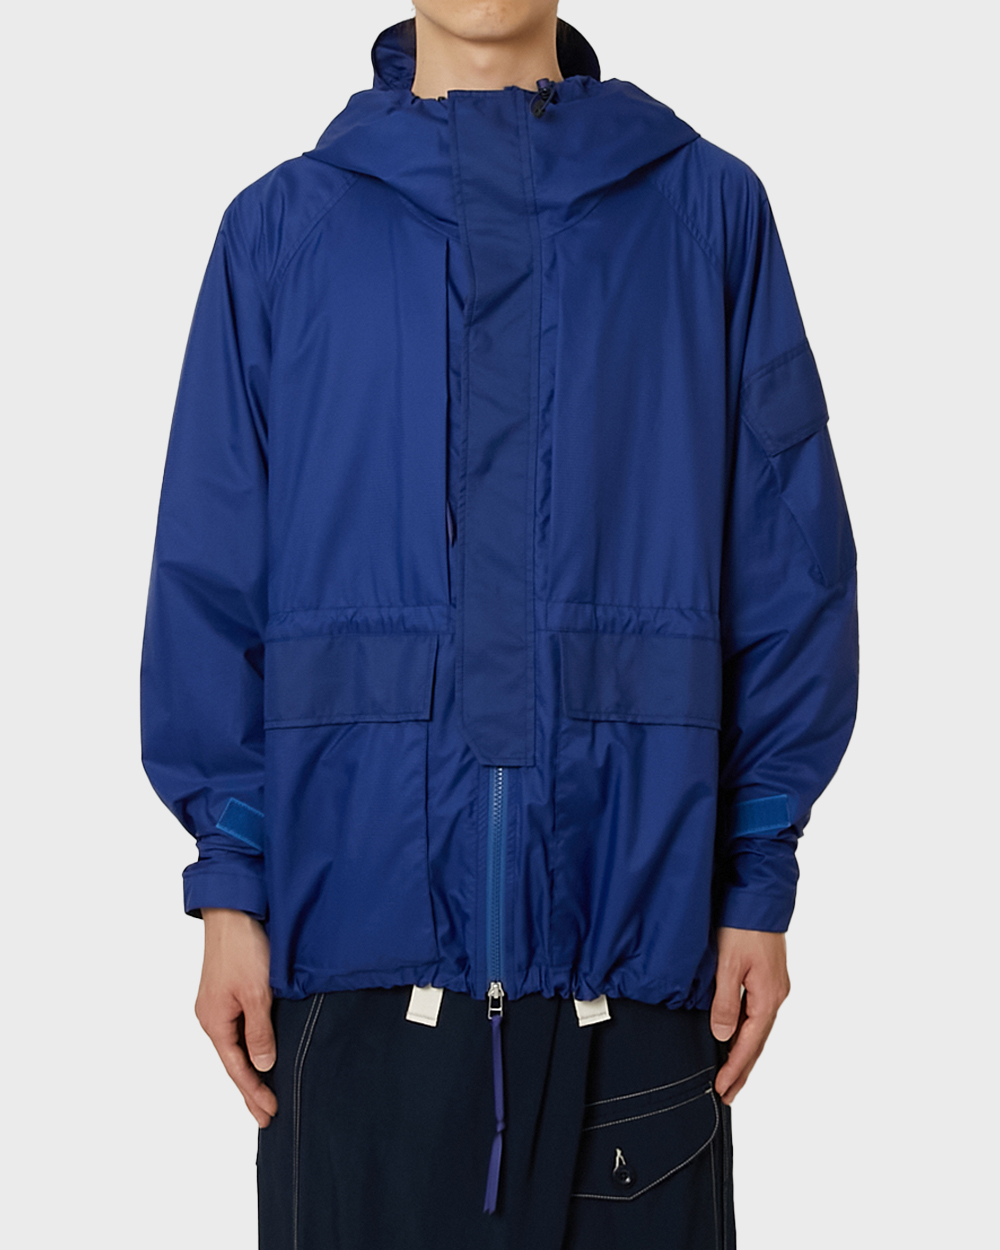 Rain Jacket (Blue)